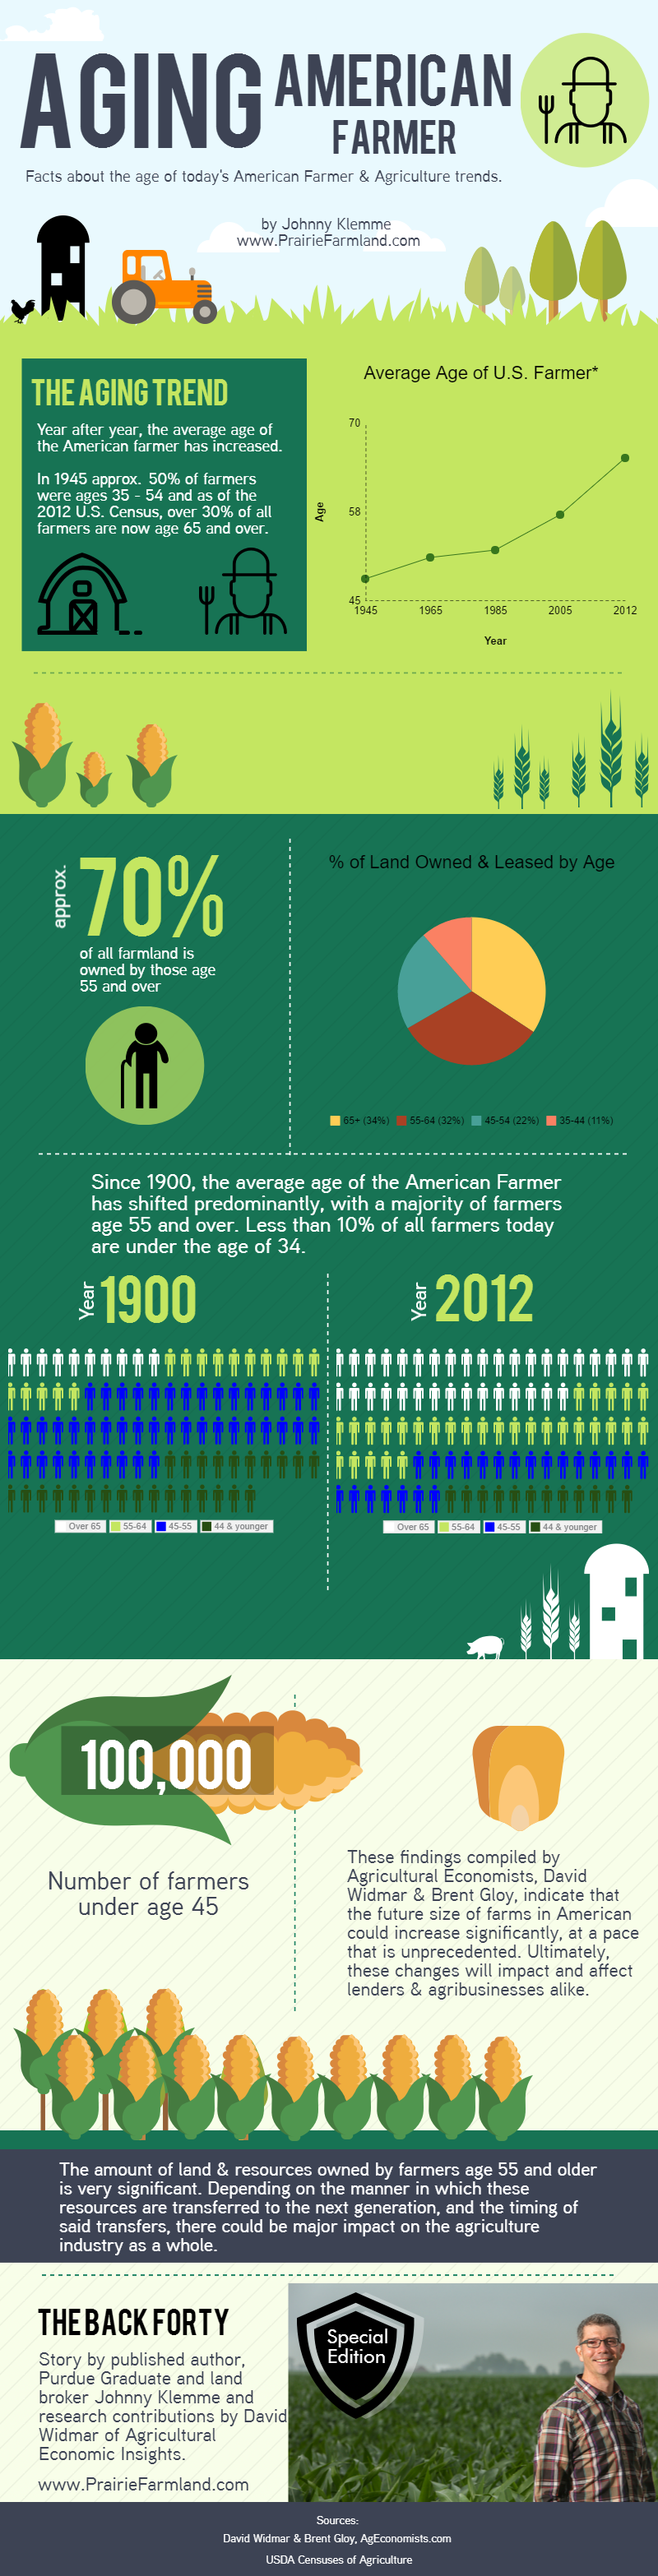 aging-american-farmer-story-brent-gloy-david-widmar-johnny-klemme  The American Farmer & Agriculture Today aging american farmer story brent gloy david widmar johnny klemme